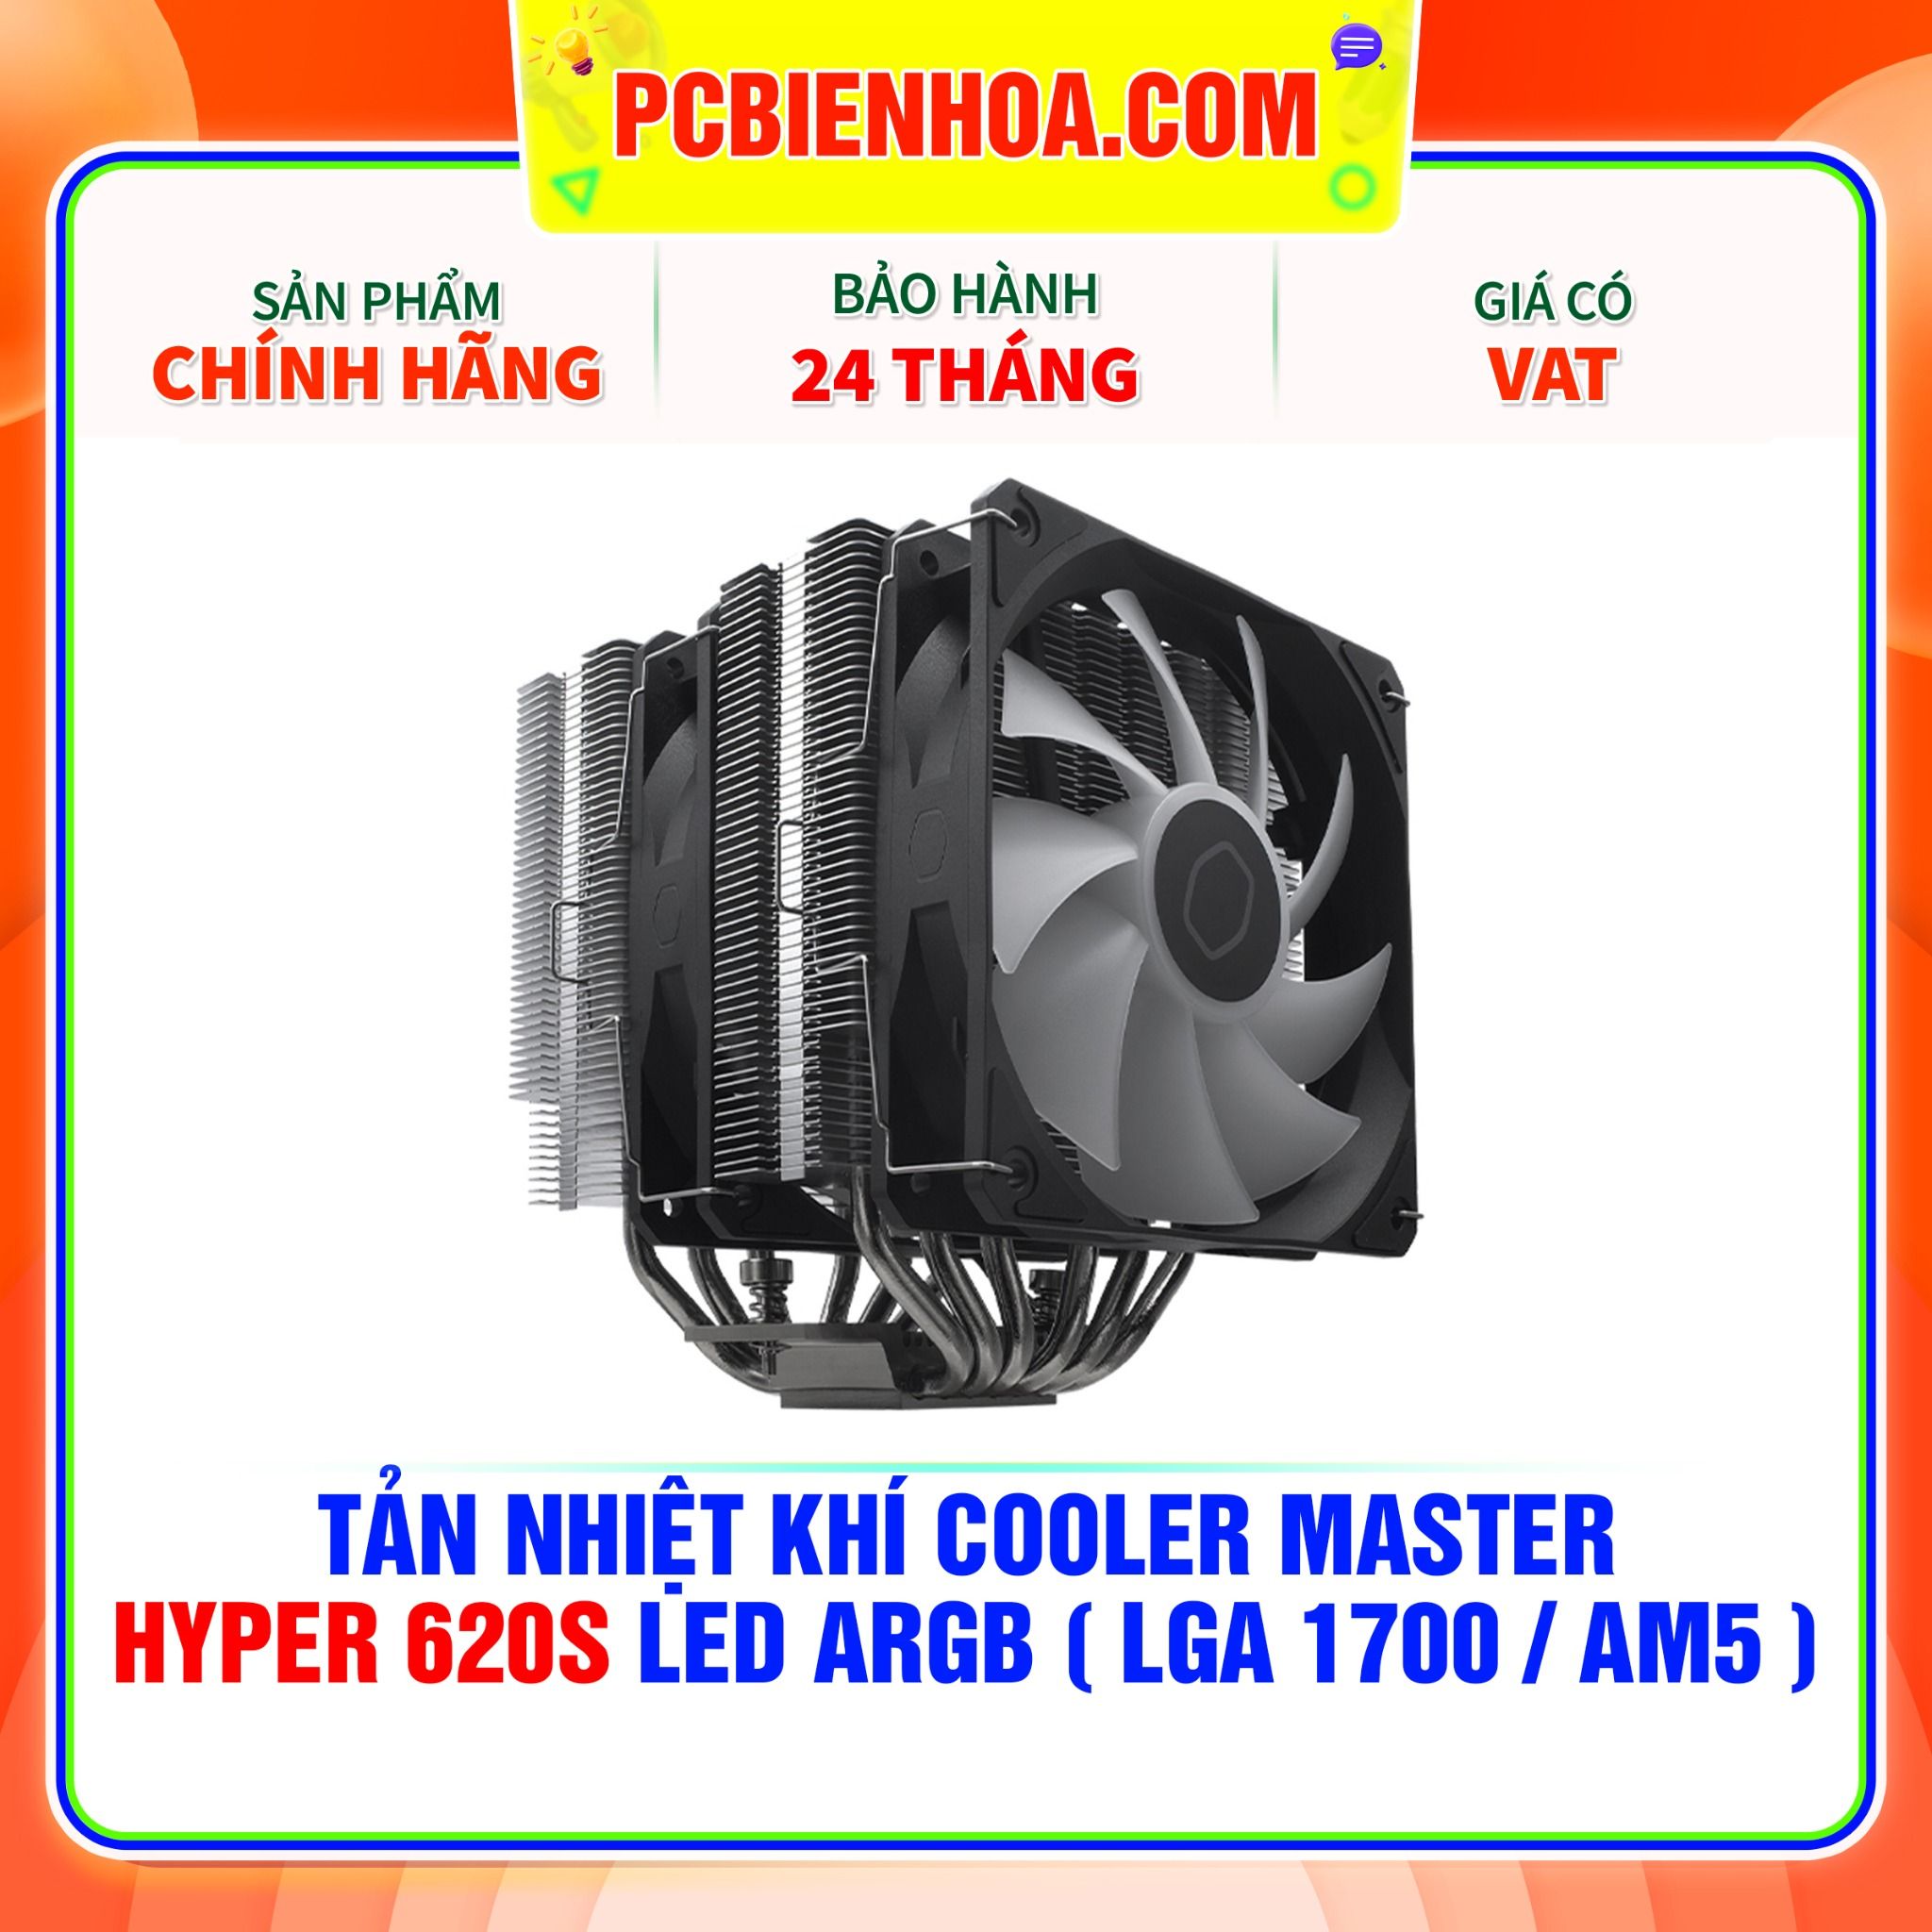  TẢN NHIỆT KHÍ COOLER MASTER HYPER 620S LED ARGB ( HỖ TRỢ SOCKET LGA 1700 /AM5 ) 